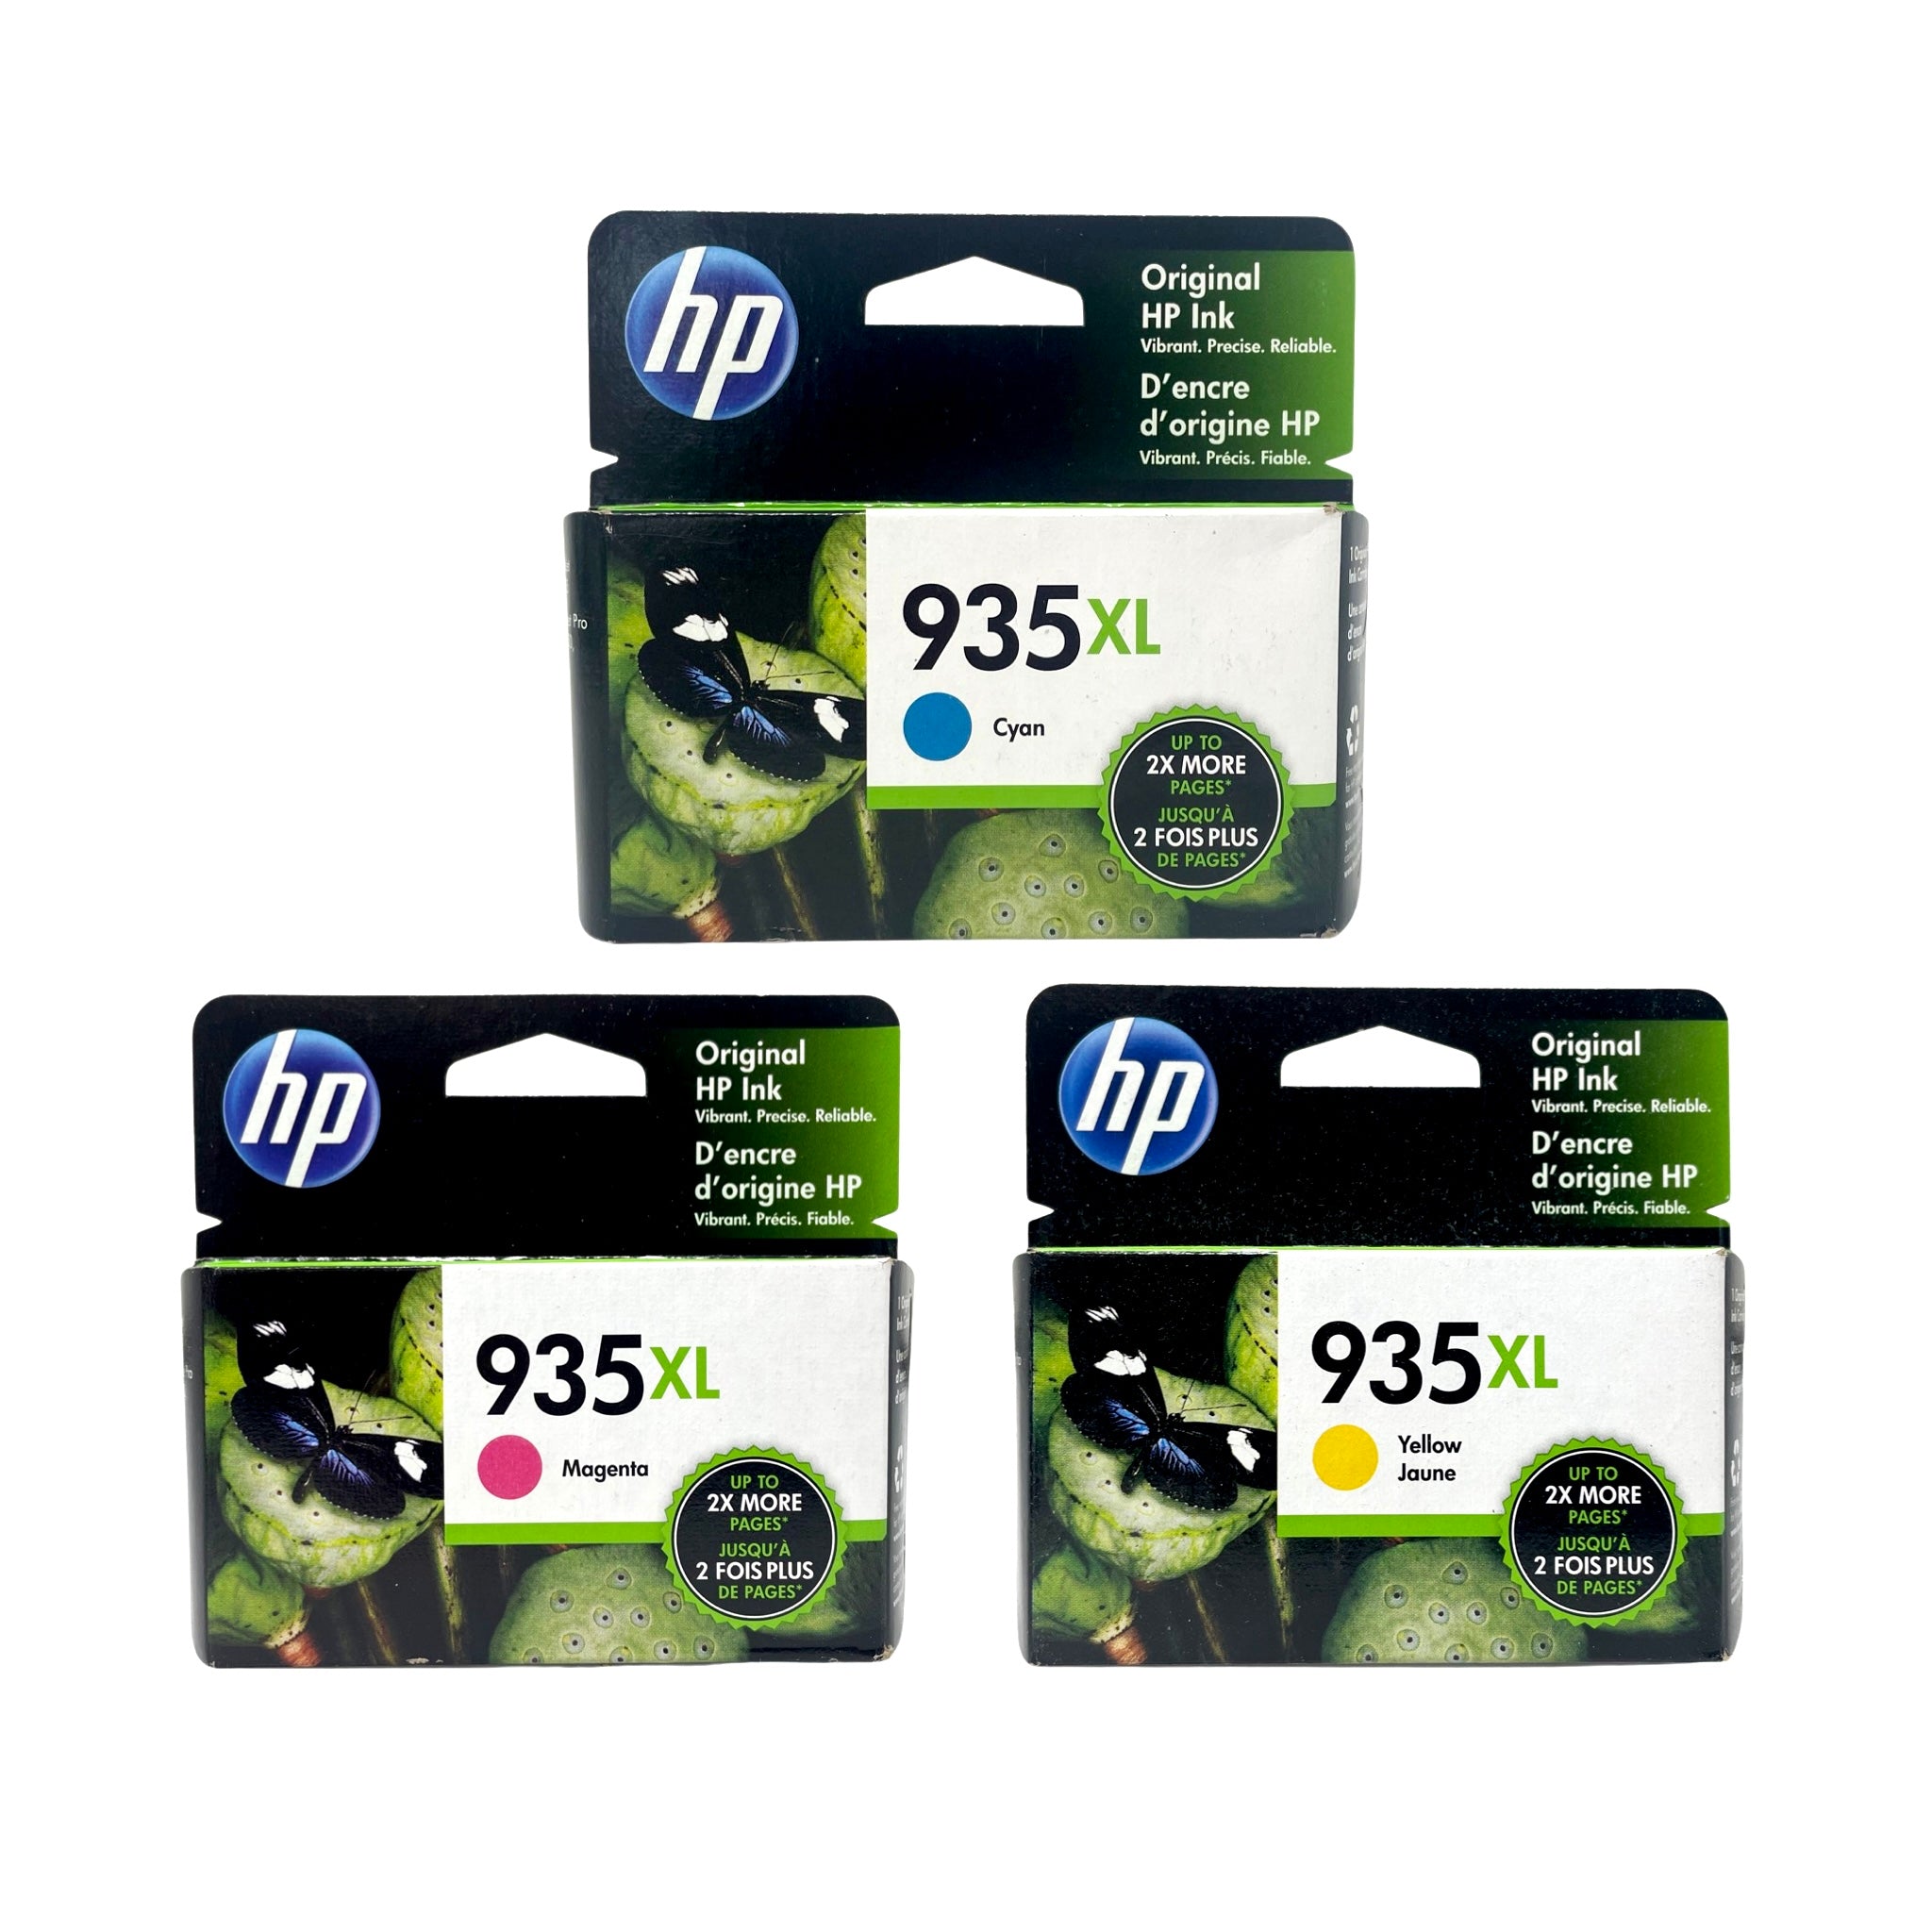 HP 935XL High Yield Ink 3 Pack - Tri Color - Original HP Ink Cartridges